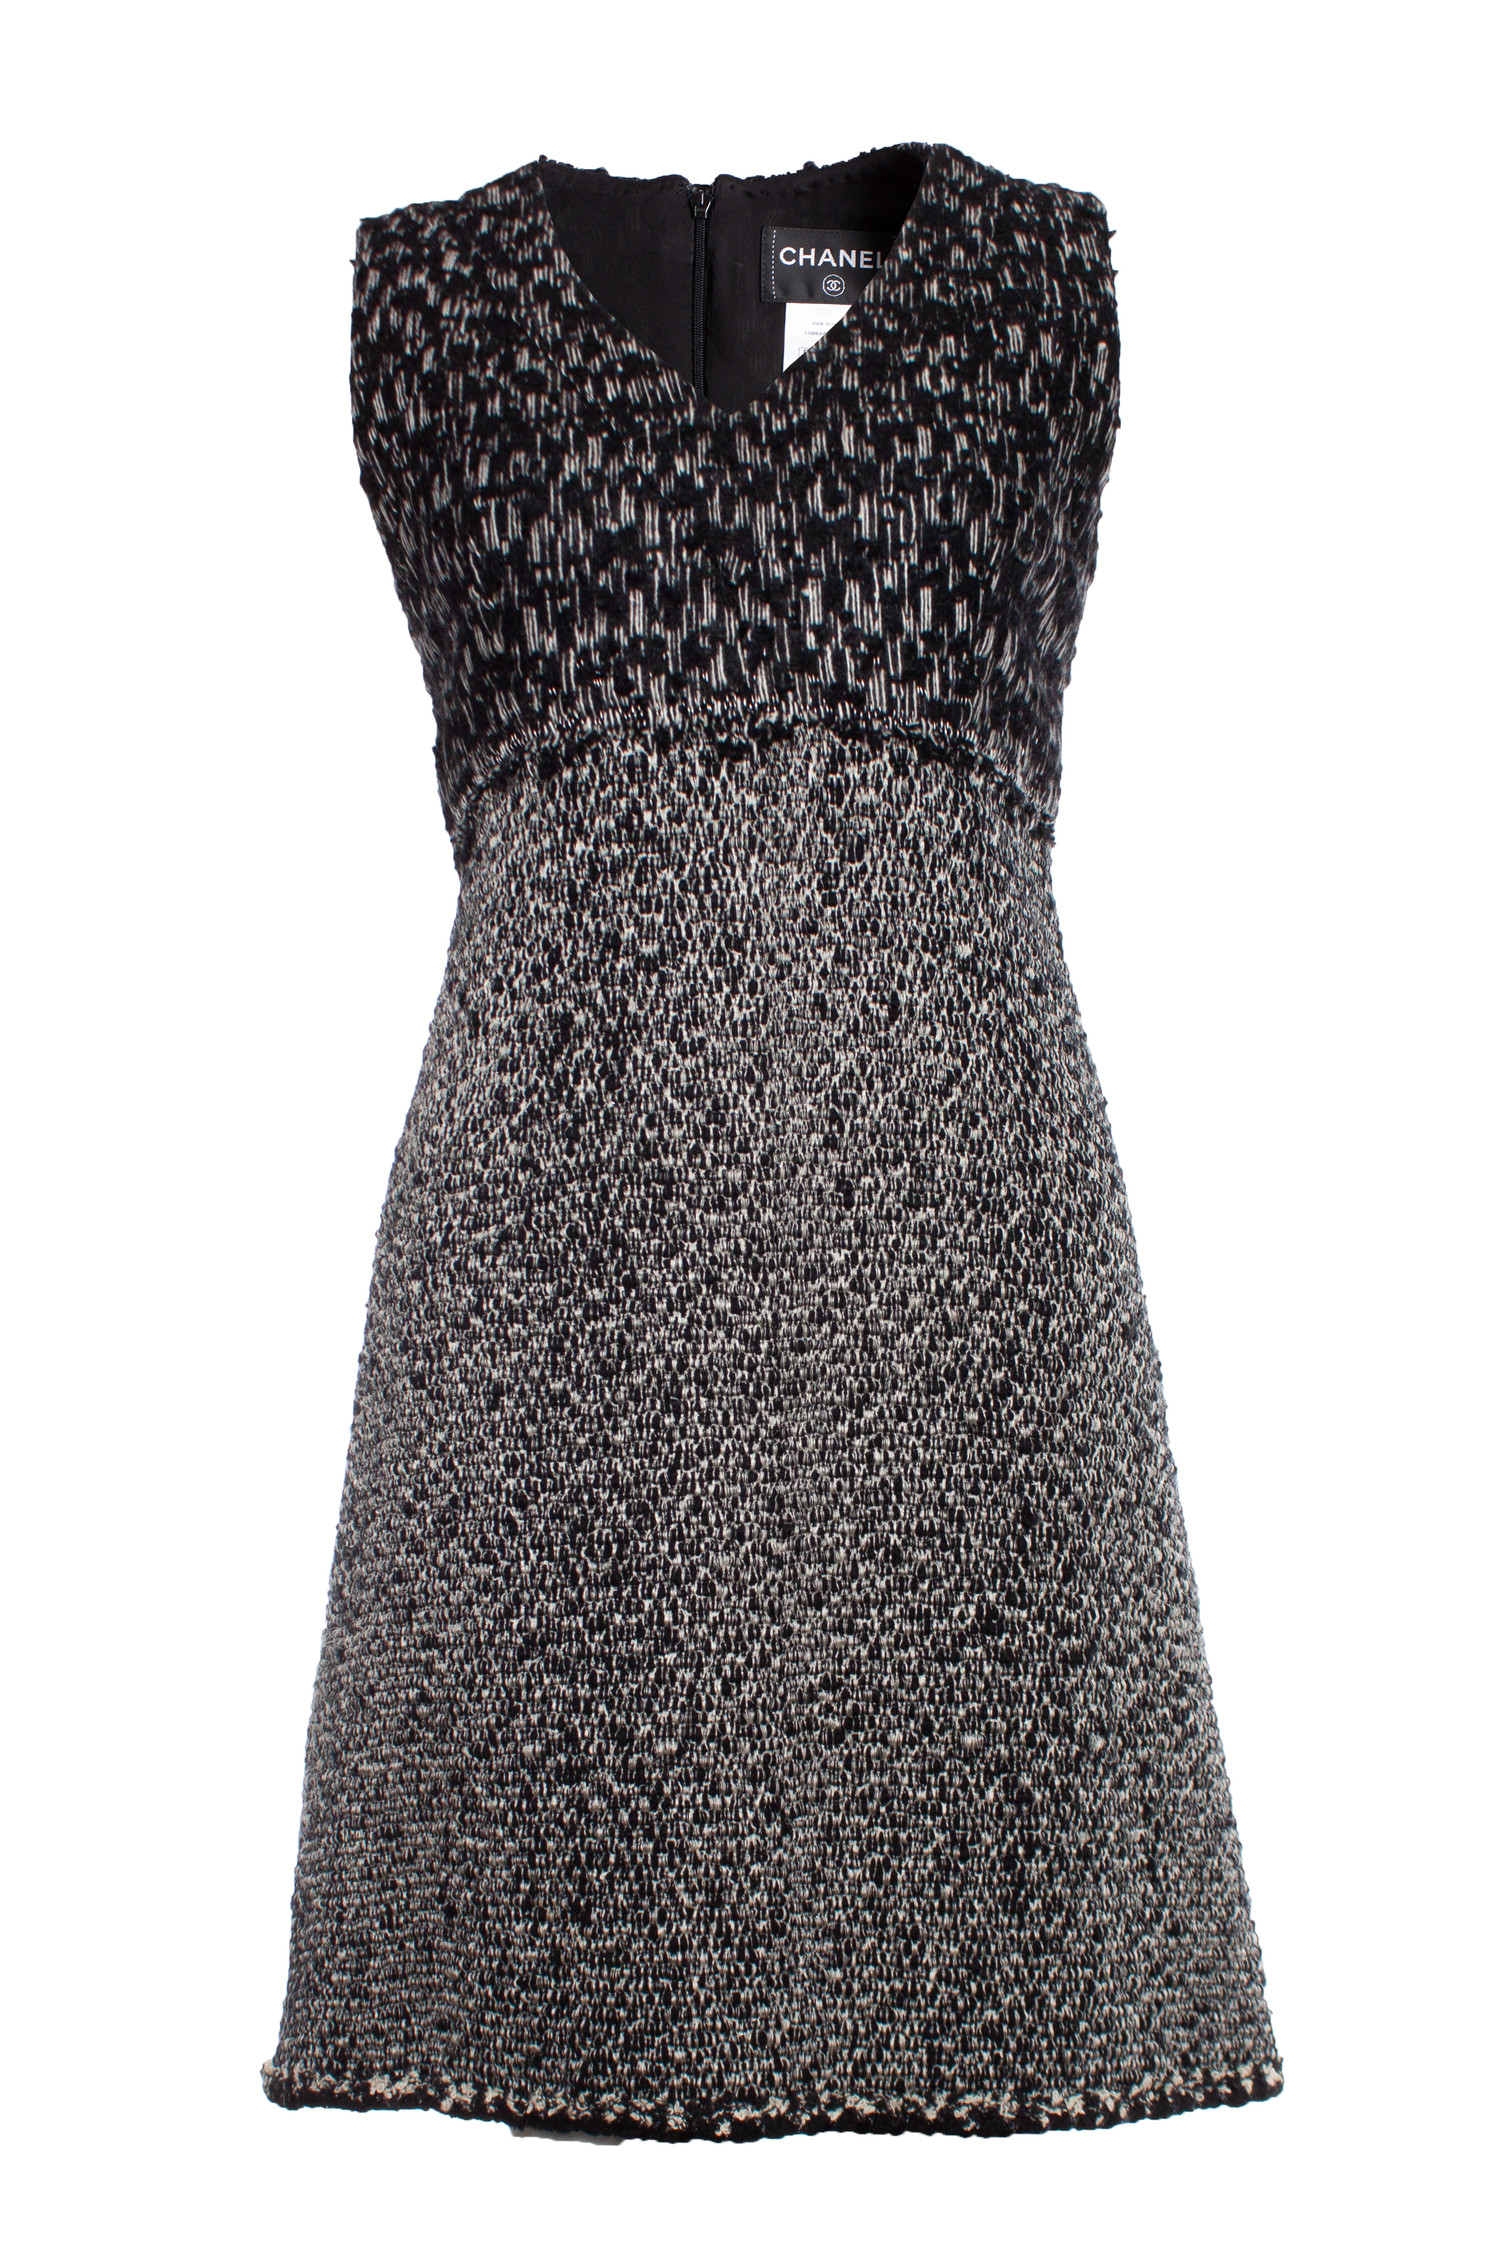 Chanel  Black  White Pinstripe Polo Dress  VSP Consignment